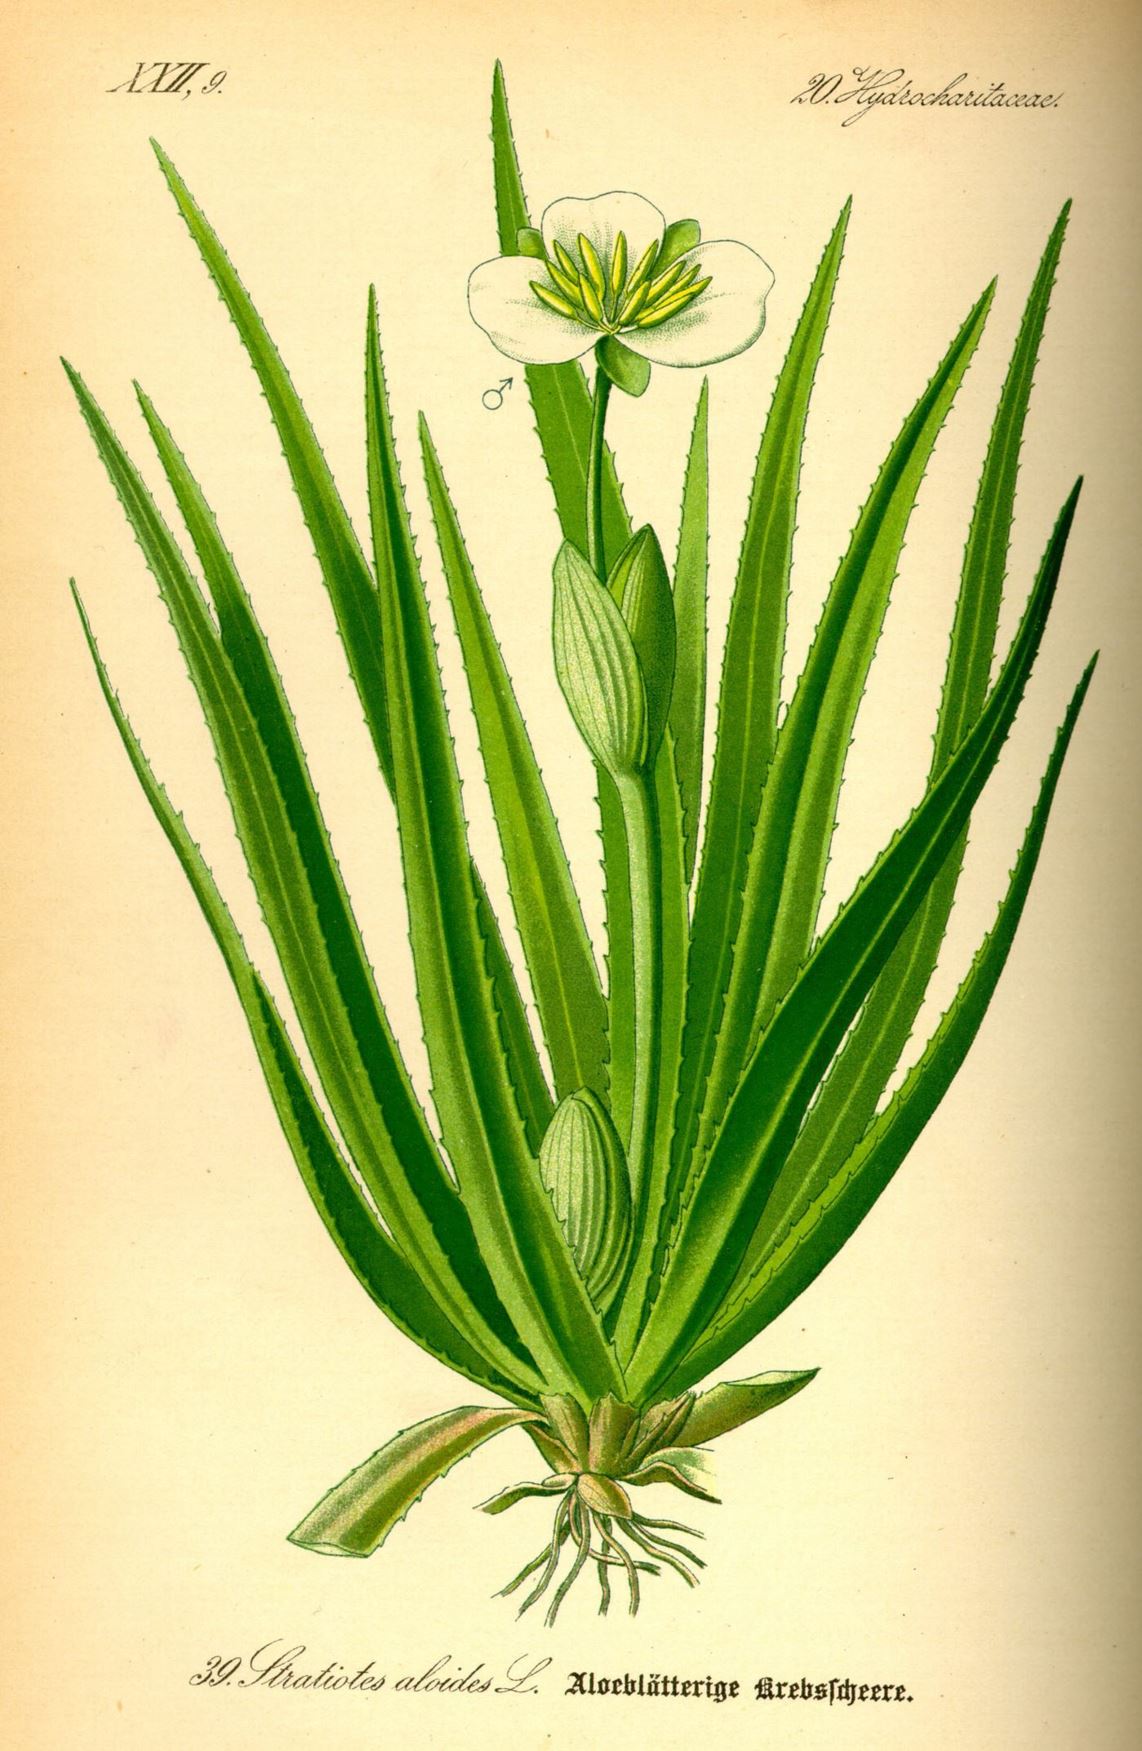 Stratiotes aloides - Krabbenscheer, Krabbescheer